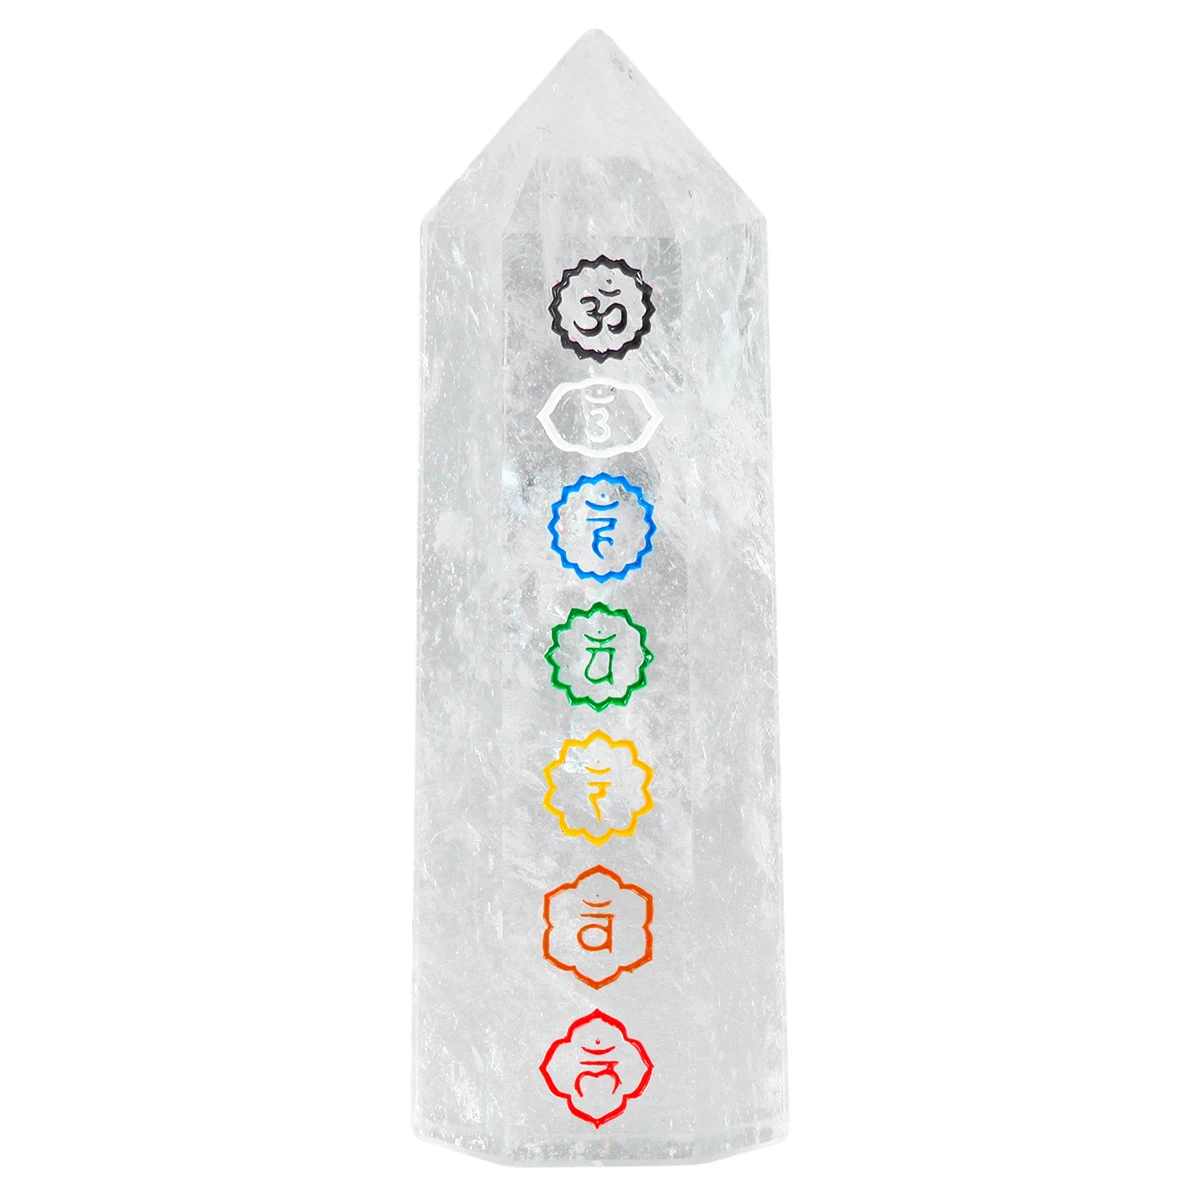 

Engraved 7 Chakra Crystal Point Wand Healing 6 Faceted Prism Natural Rock Quartz Hexagon Stone For Yoga Meditation Balancing